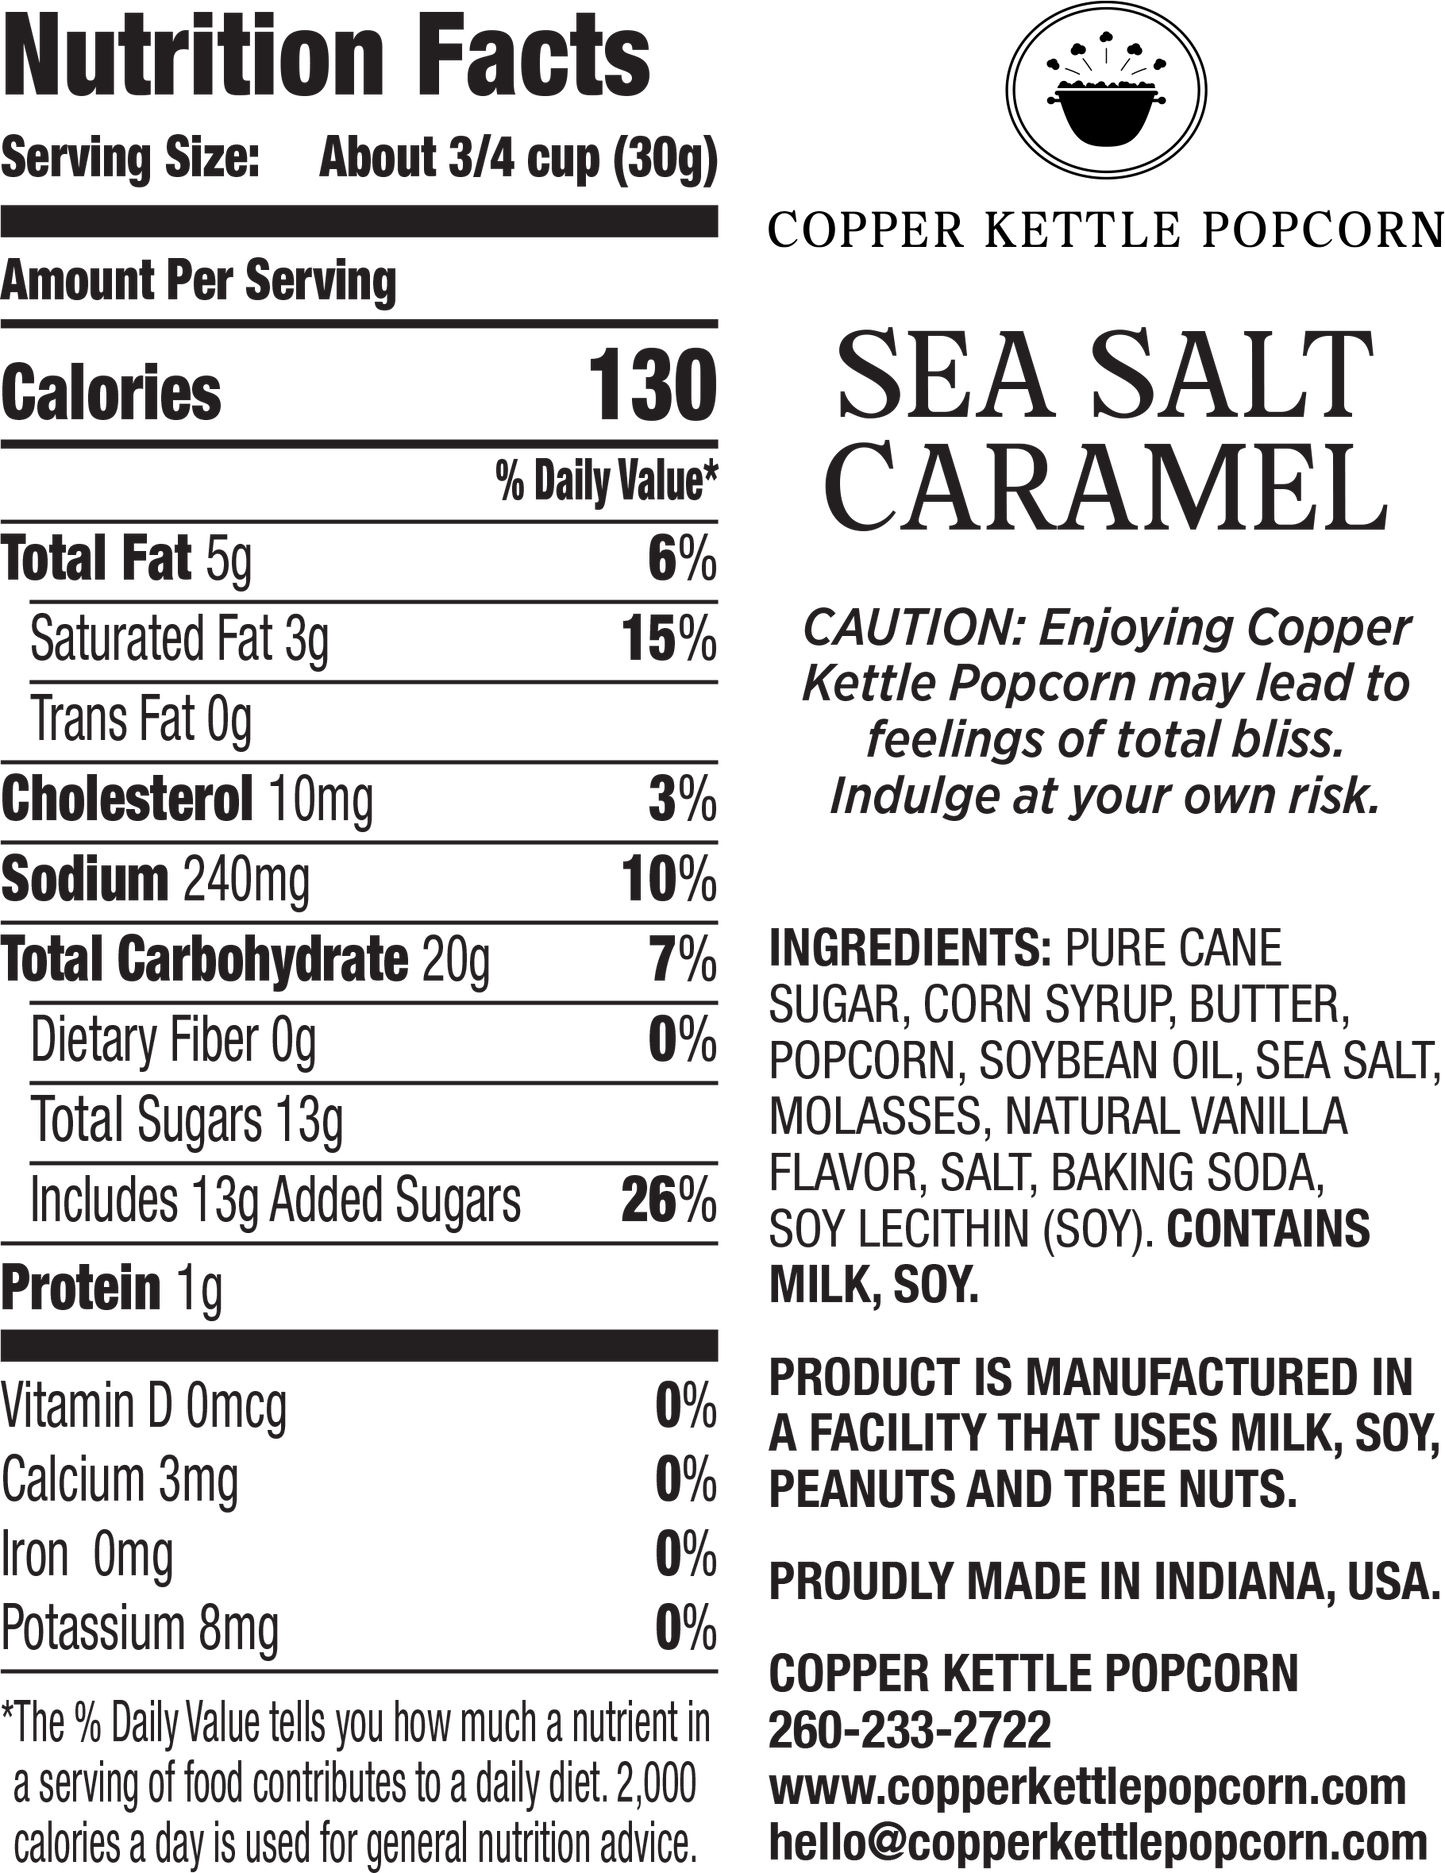 Sea Salt Caramel Bag -  6 Servings